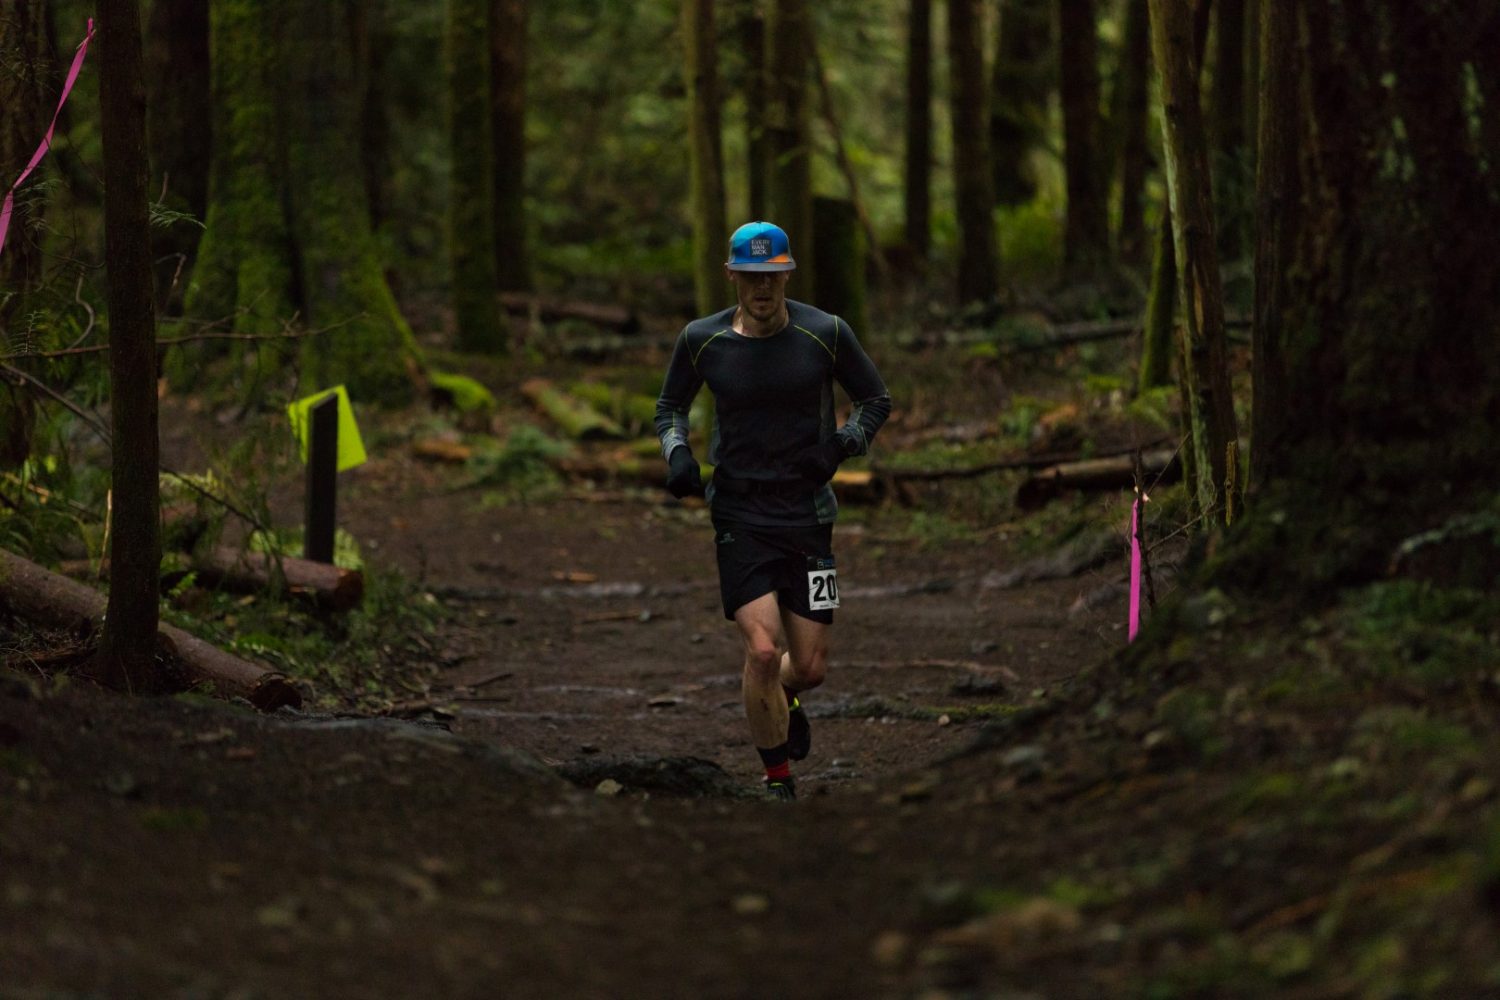 Vancouver Island Trail Running Series Coastline Endurance Running